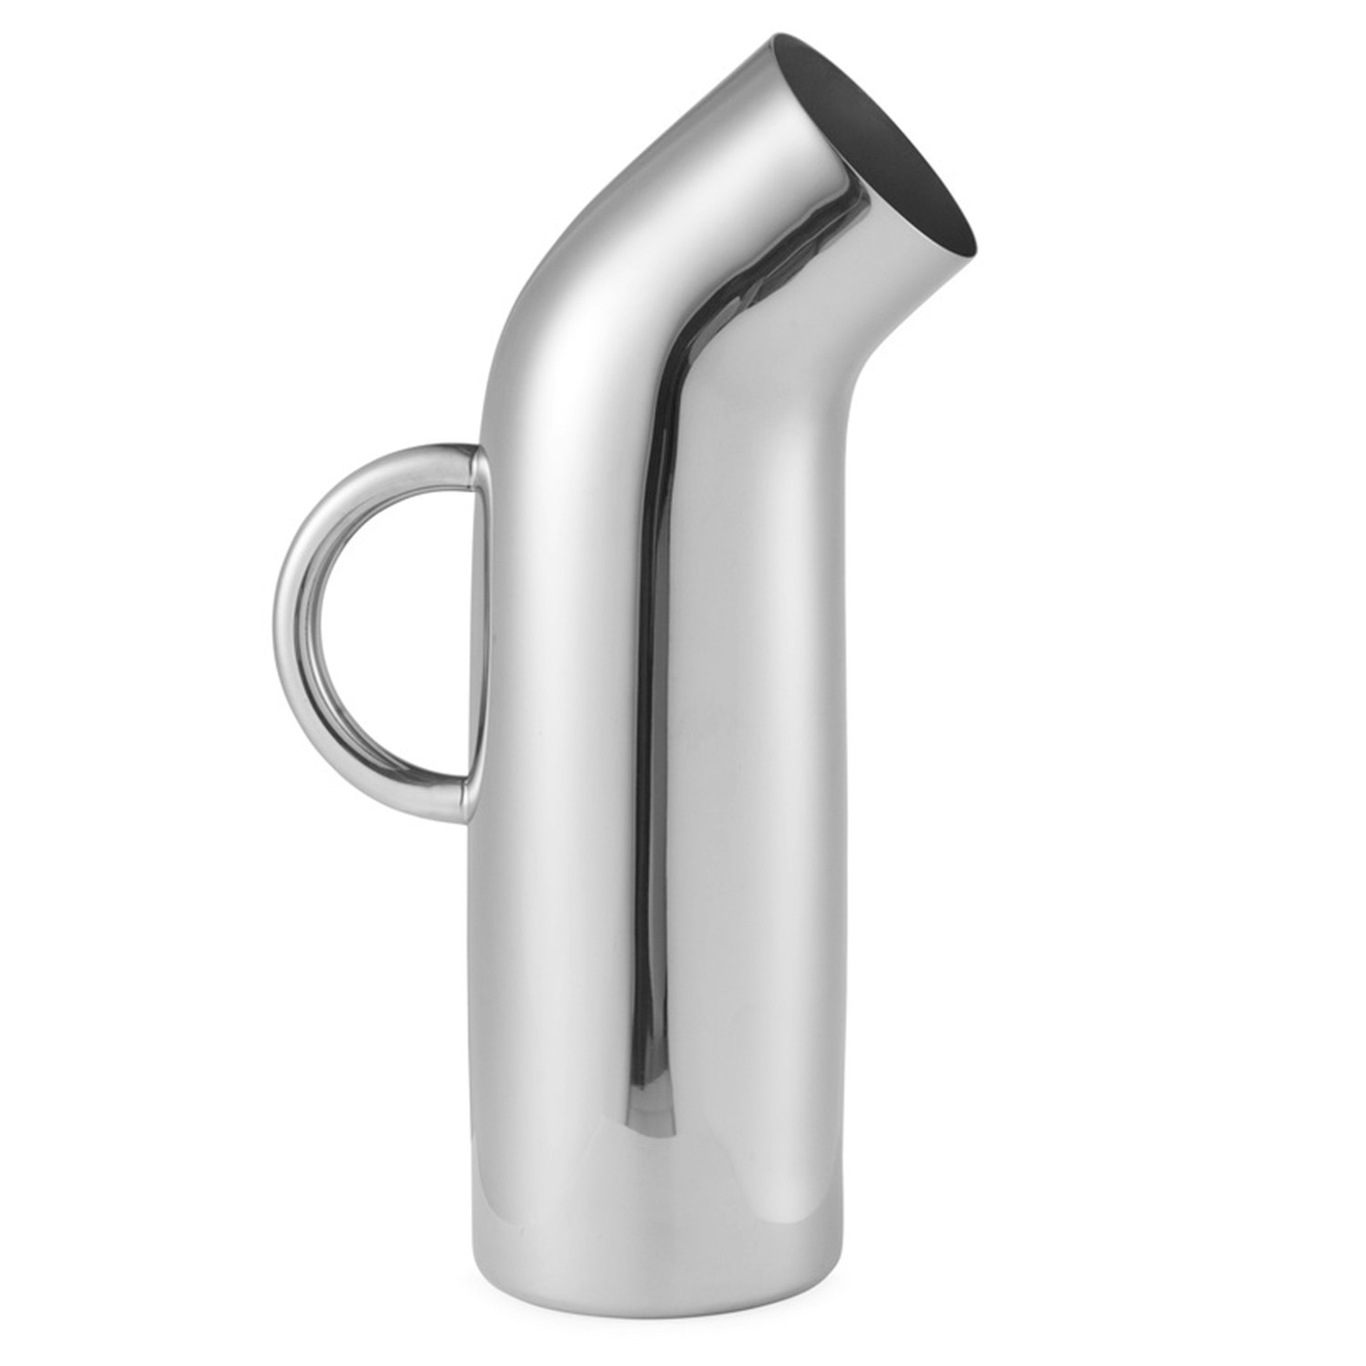 https://royaldesign.com/image/2/normann-copenhagen-pipe-pitcher-water-carafe-0?w=800&quality=80